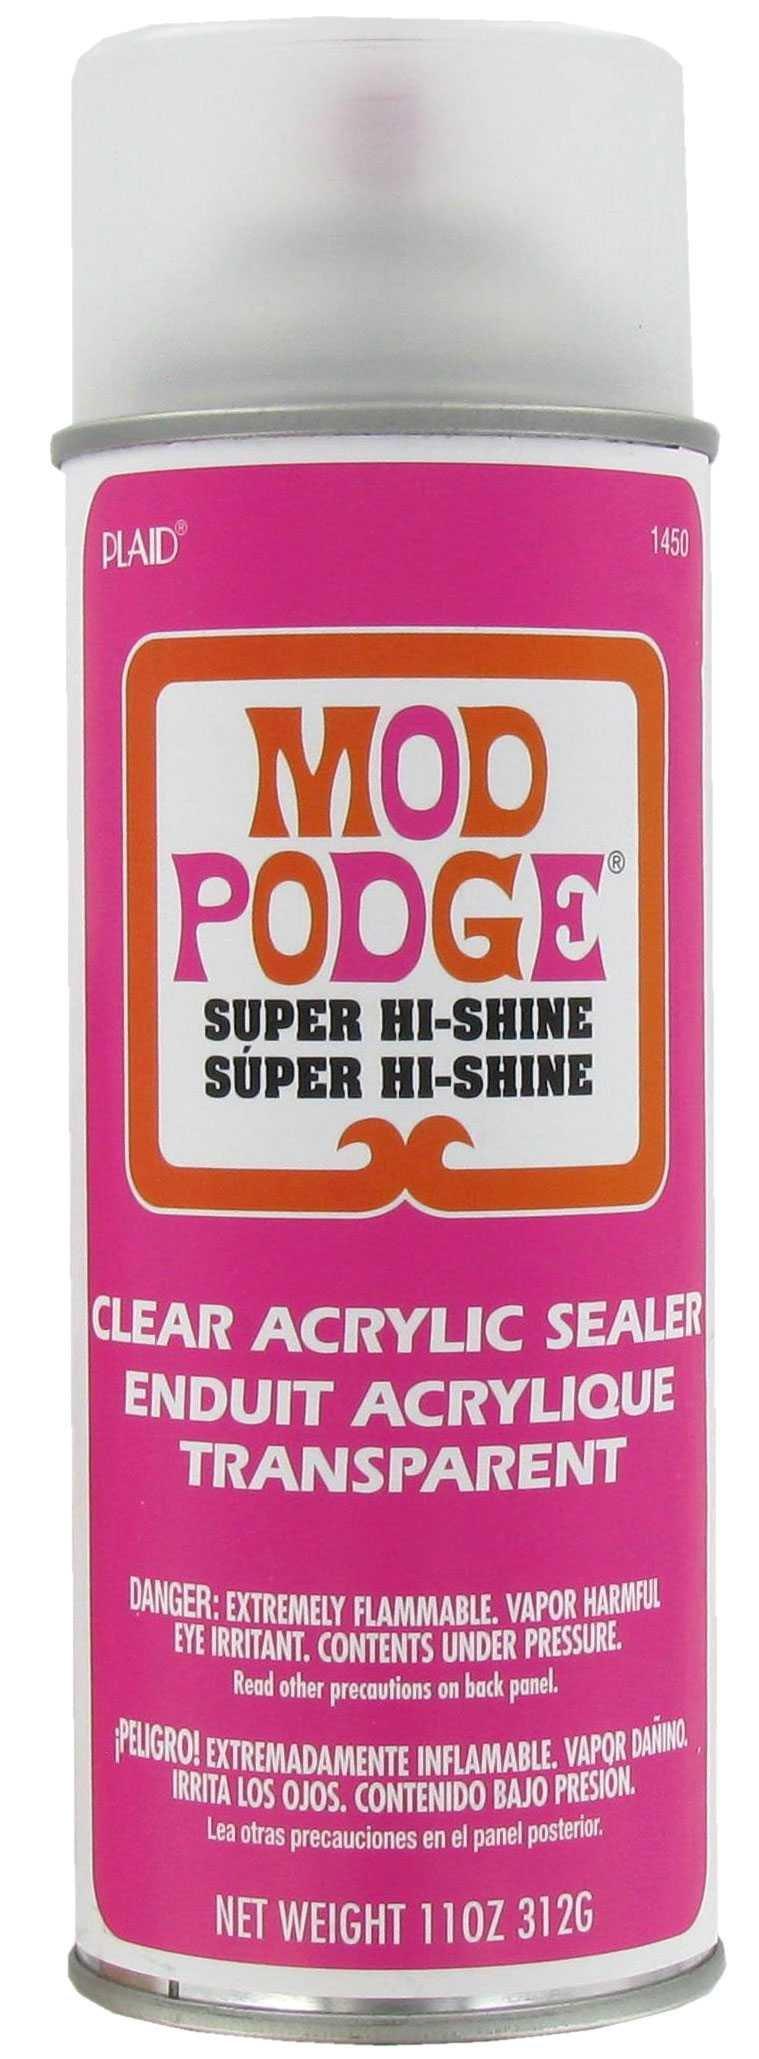 Mod Podge Super Hi-Shine Acrylic Sealer, Hobby Lobby